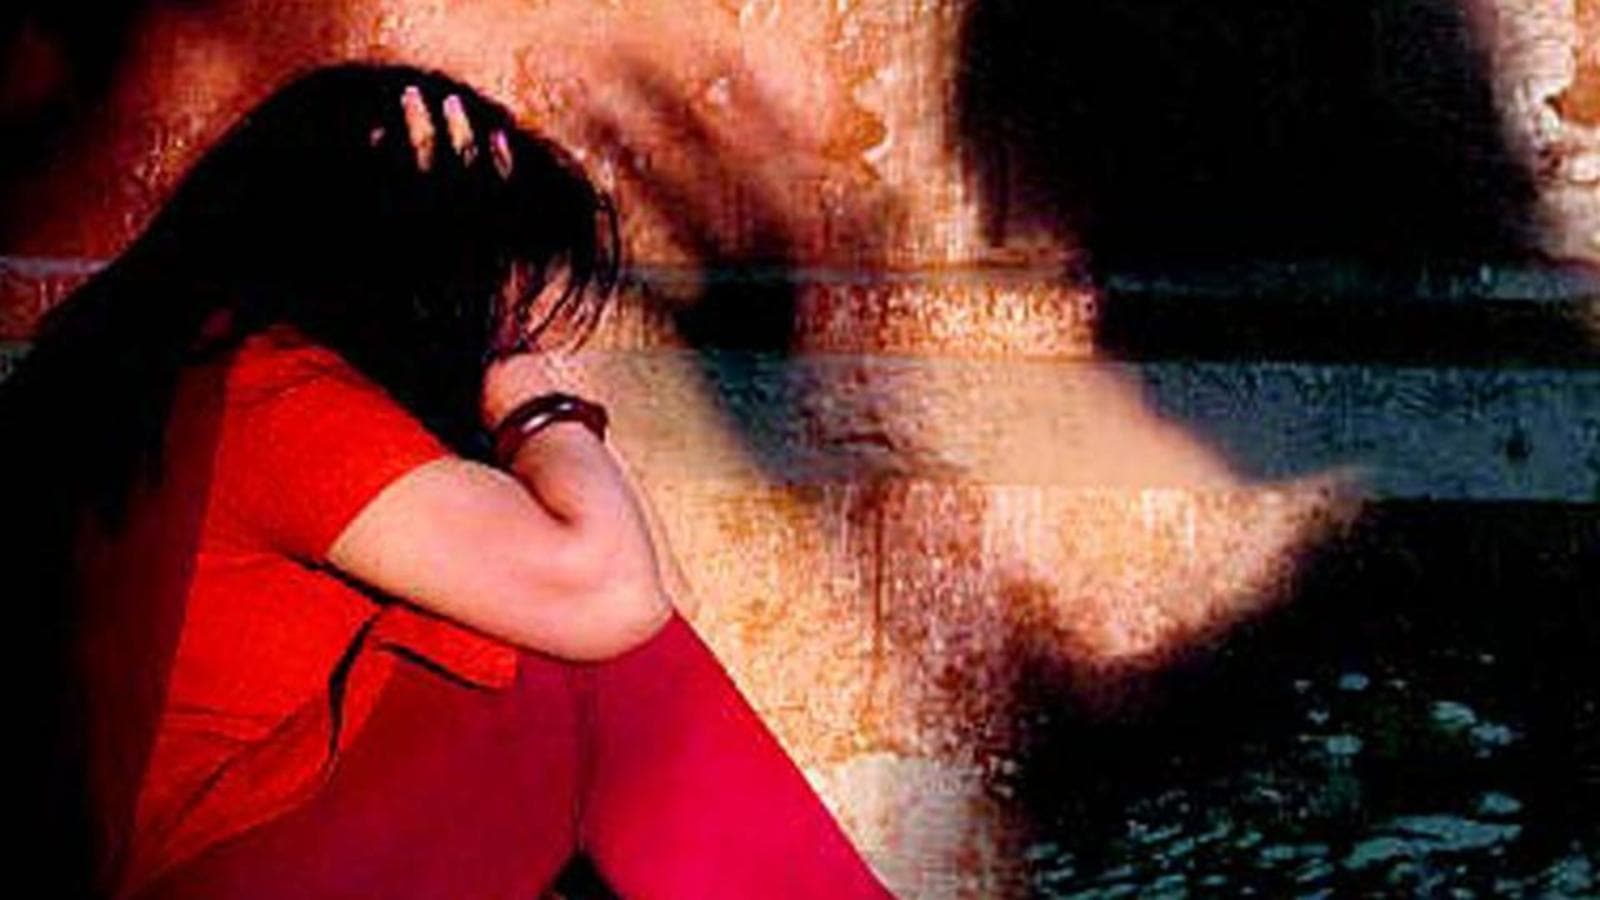 Police Rape Xxx Com - Kerala model gang-raped in Kochi, one arrested: Police | Latest News India  - Hindustan Times